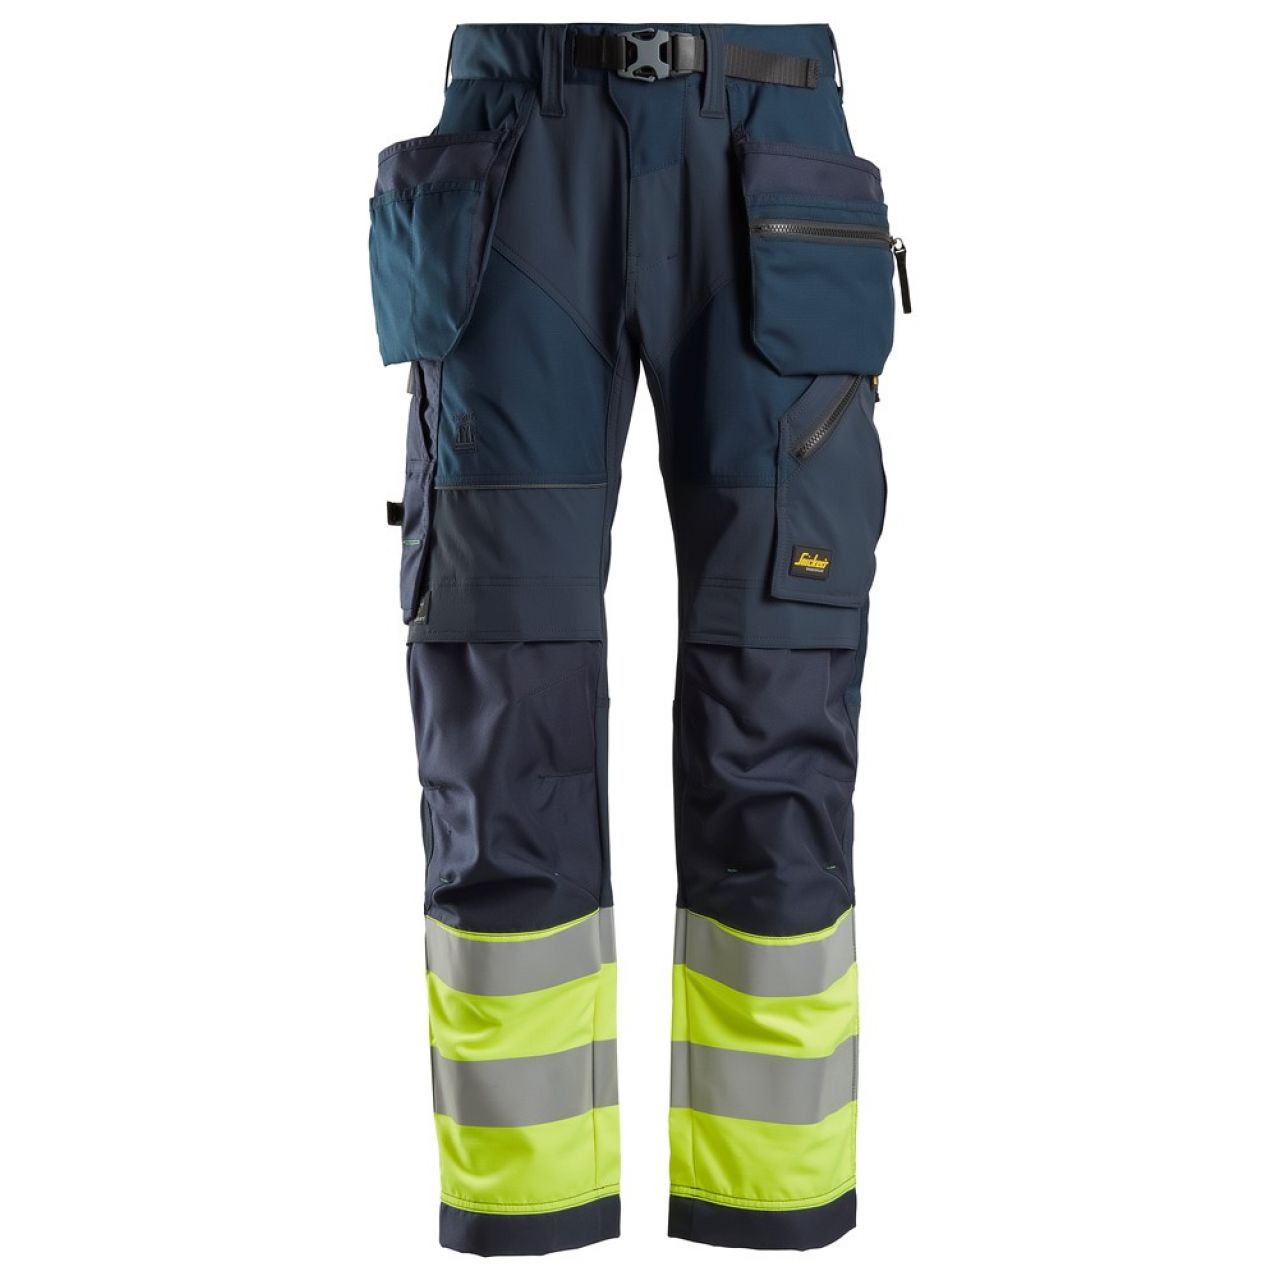 6931 Pantalones largos de trabajo de alta visibilidad clase 1 con bolsillos flotantes FlexiWork azul marino-amarillo talla 254